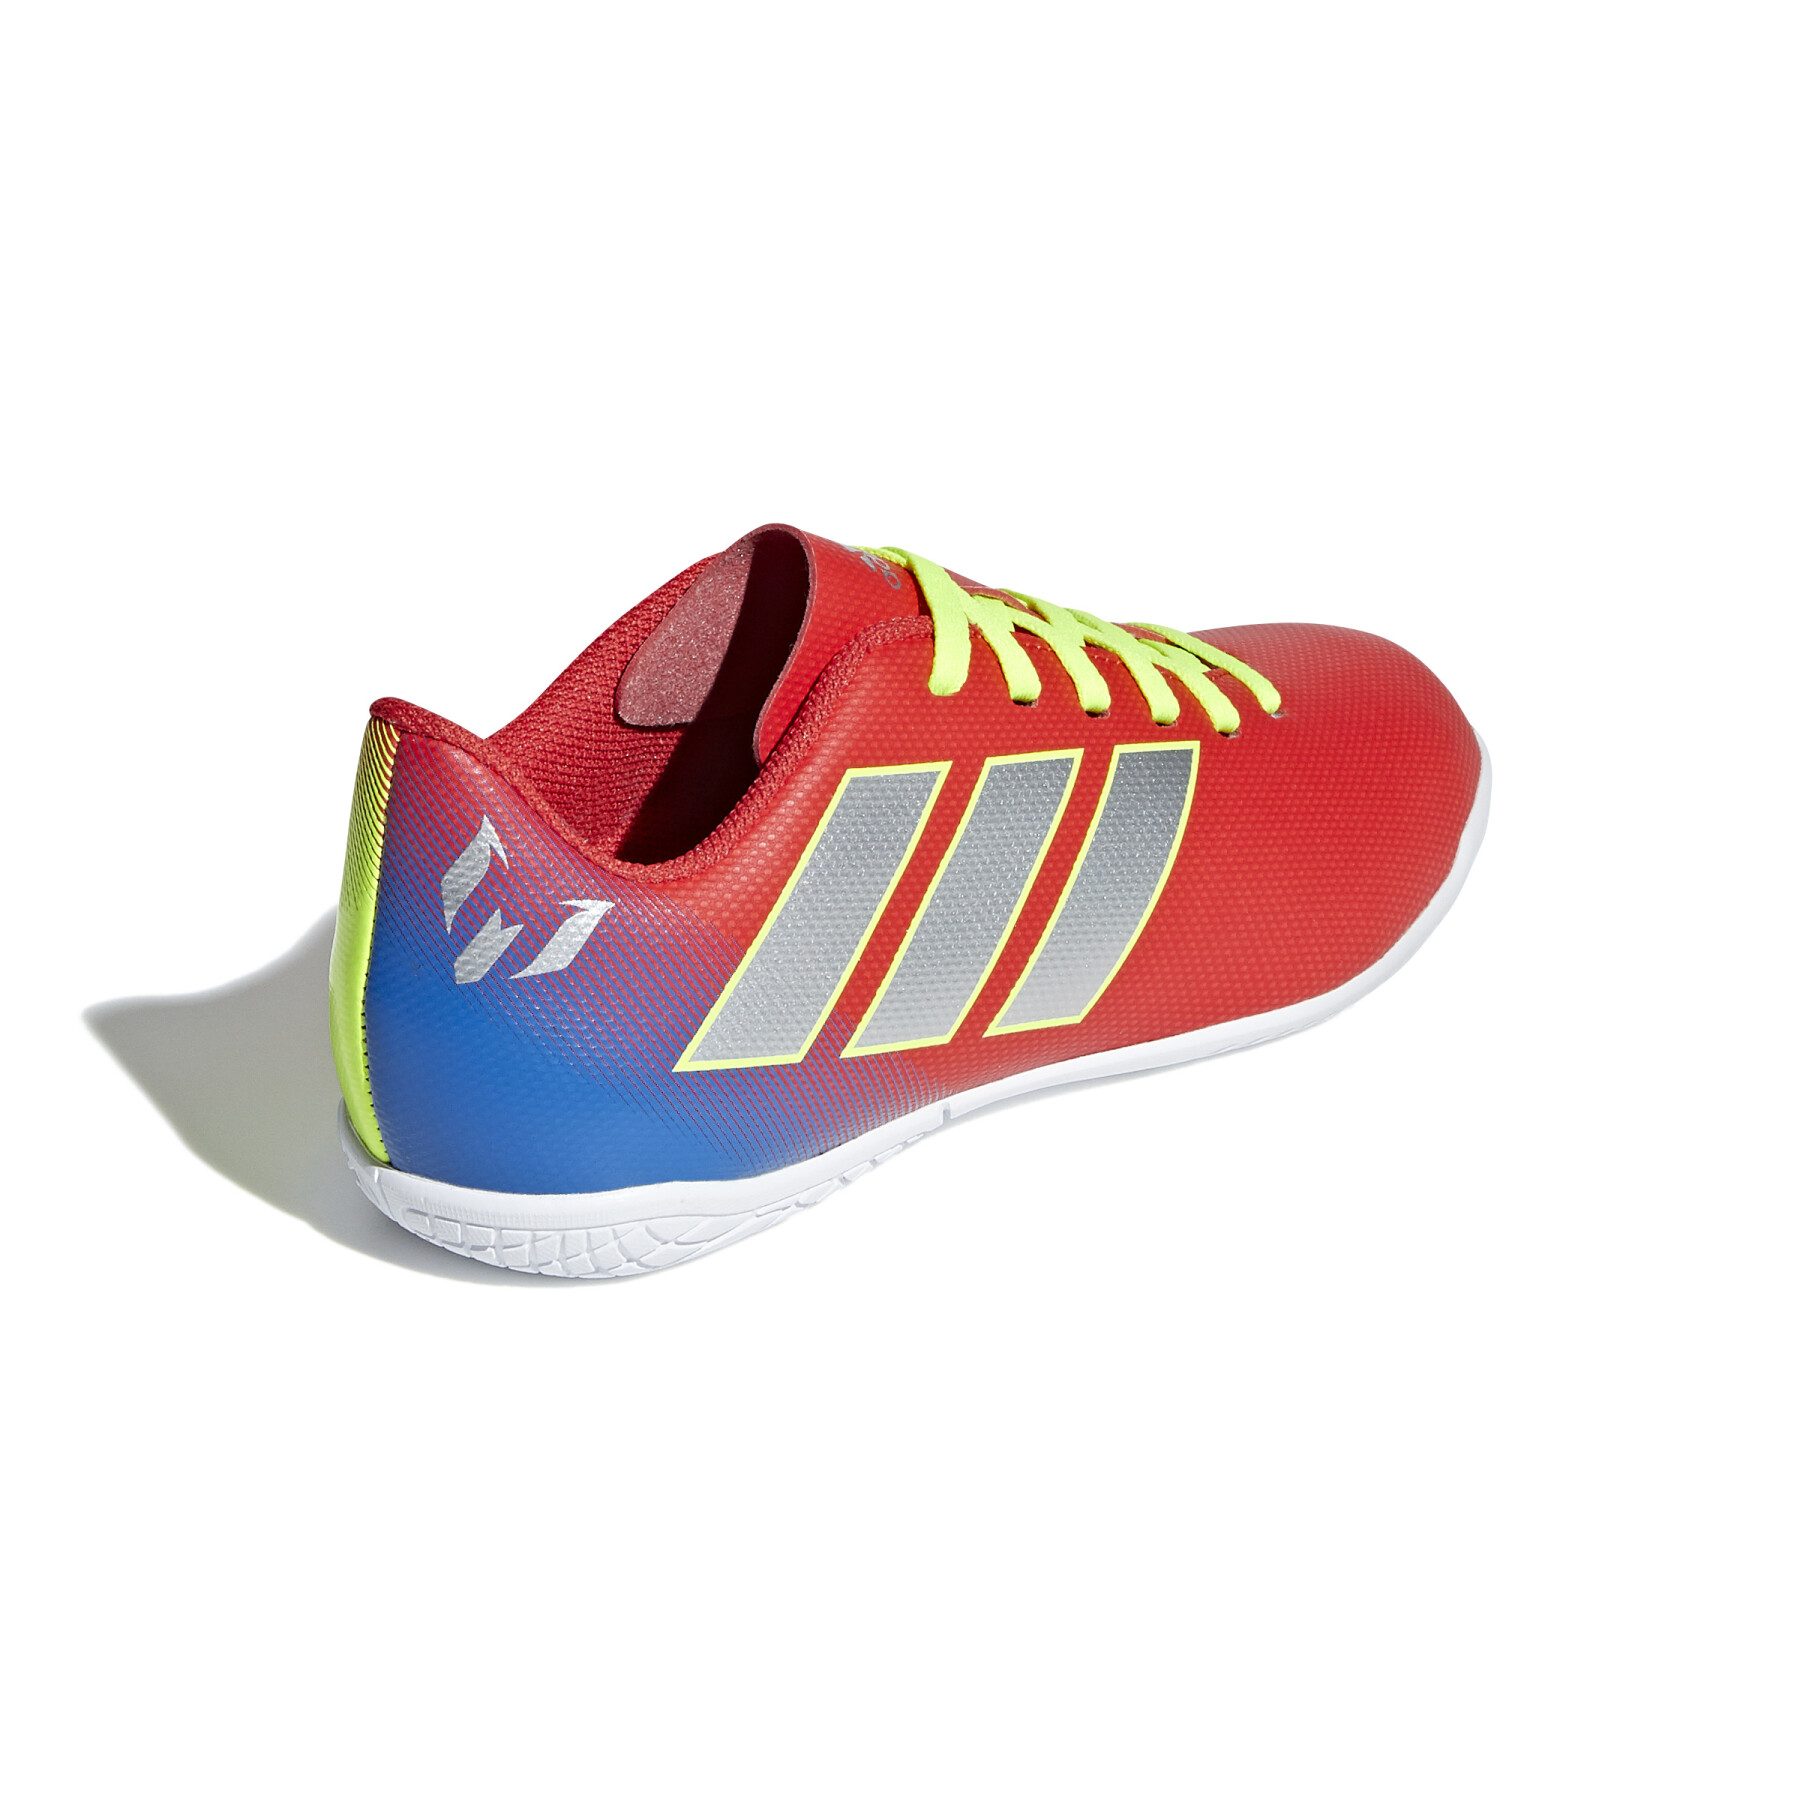 Scarpe da calcio per bambini adidas Nemeziz Messi Tango 18.4 IN